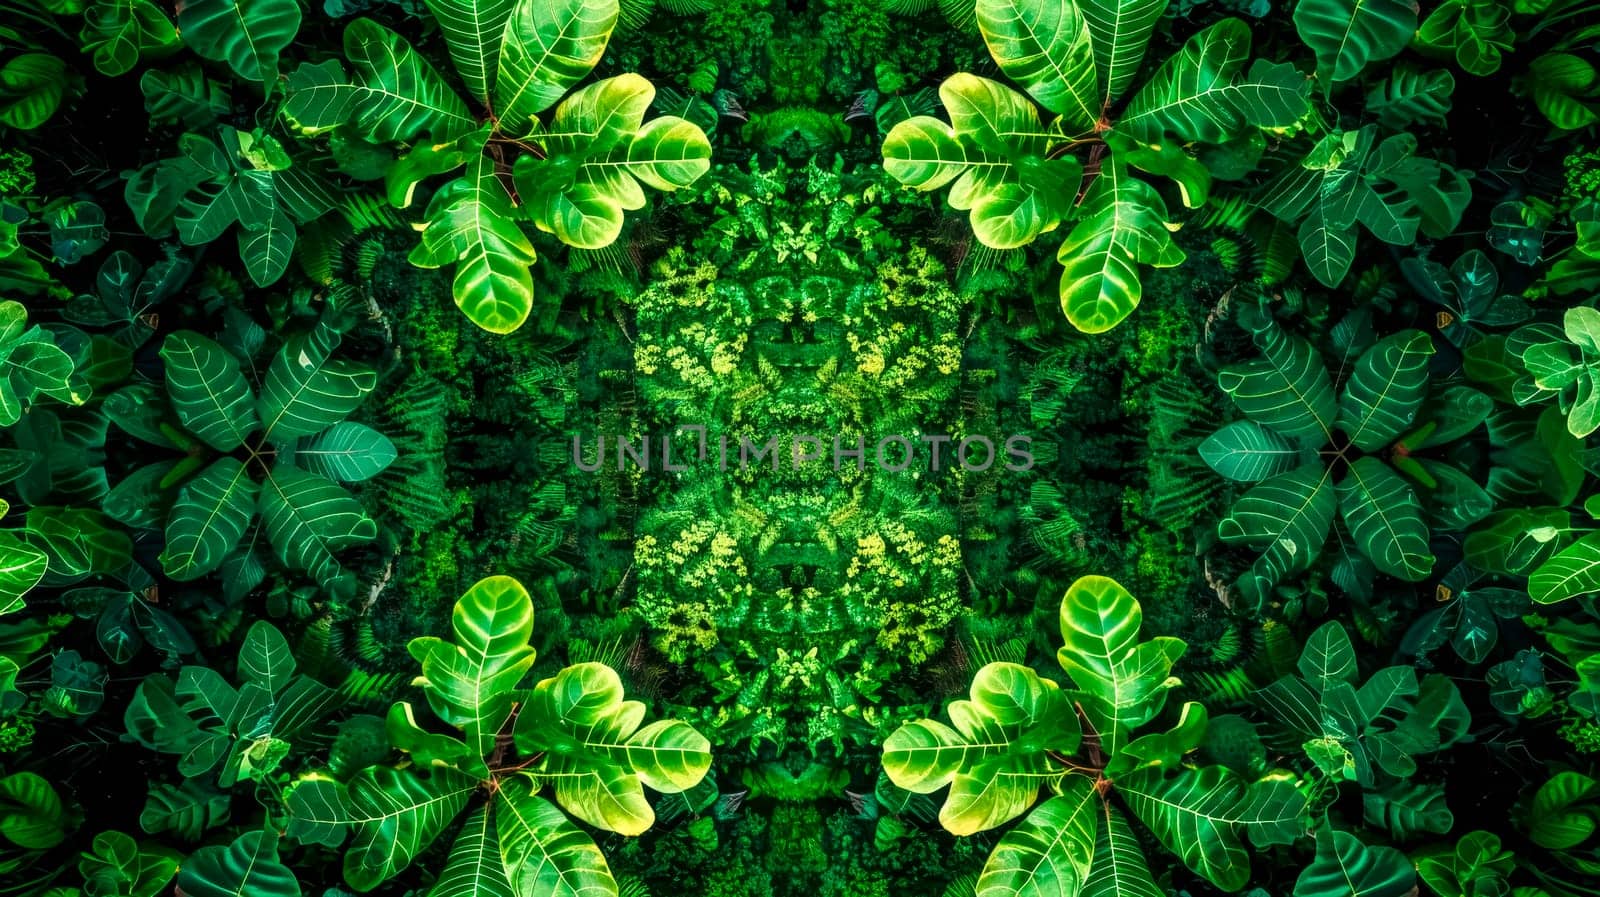 Symmetrical green leaf pattern background by Edophoto